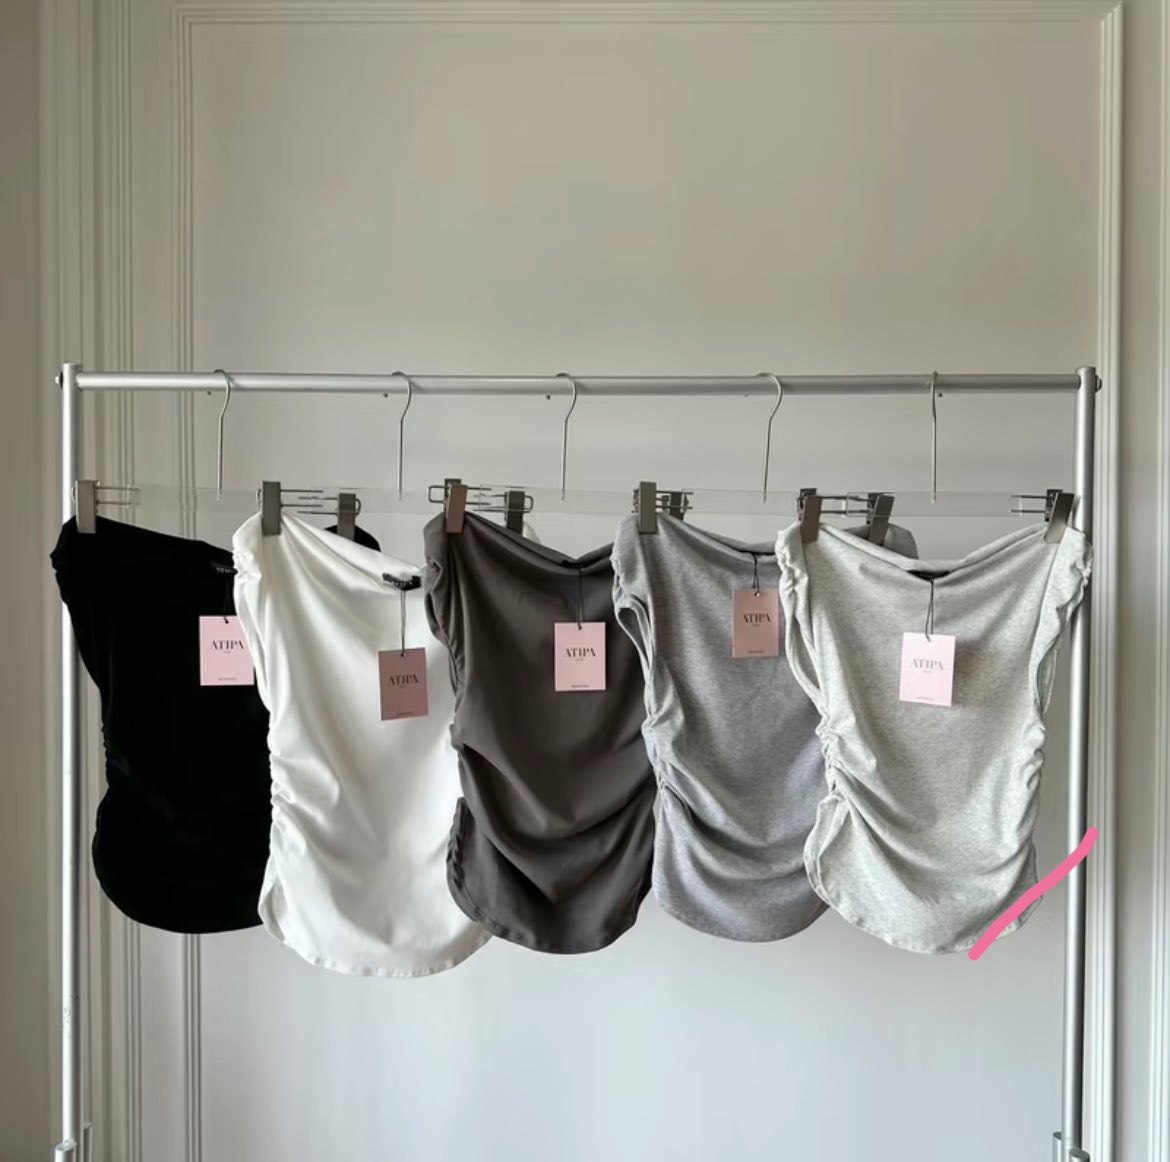 ATIPASHOP
Price: 110 free shipping (สีเทาอ่อน)

#vghbkkมือสอง #vghbkkส่งต่อ #ส่งต่อstylistshop #เสื้อมือ2 #cintageshop #cintageส่งต่อ #cintage  #ส่งต่อcintage #ส่งต่อเสื้อผ้ามือ2 #ส่งต่อเสื้อผ้า #ส่งต่อเสื้อผ้ามือสอง